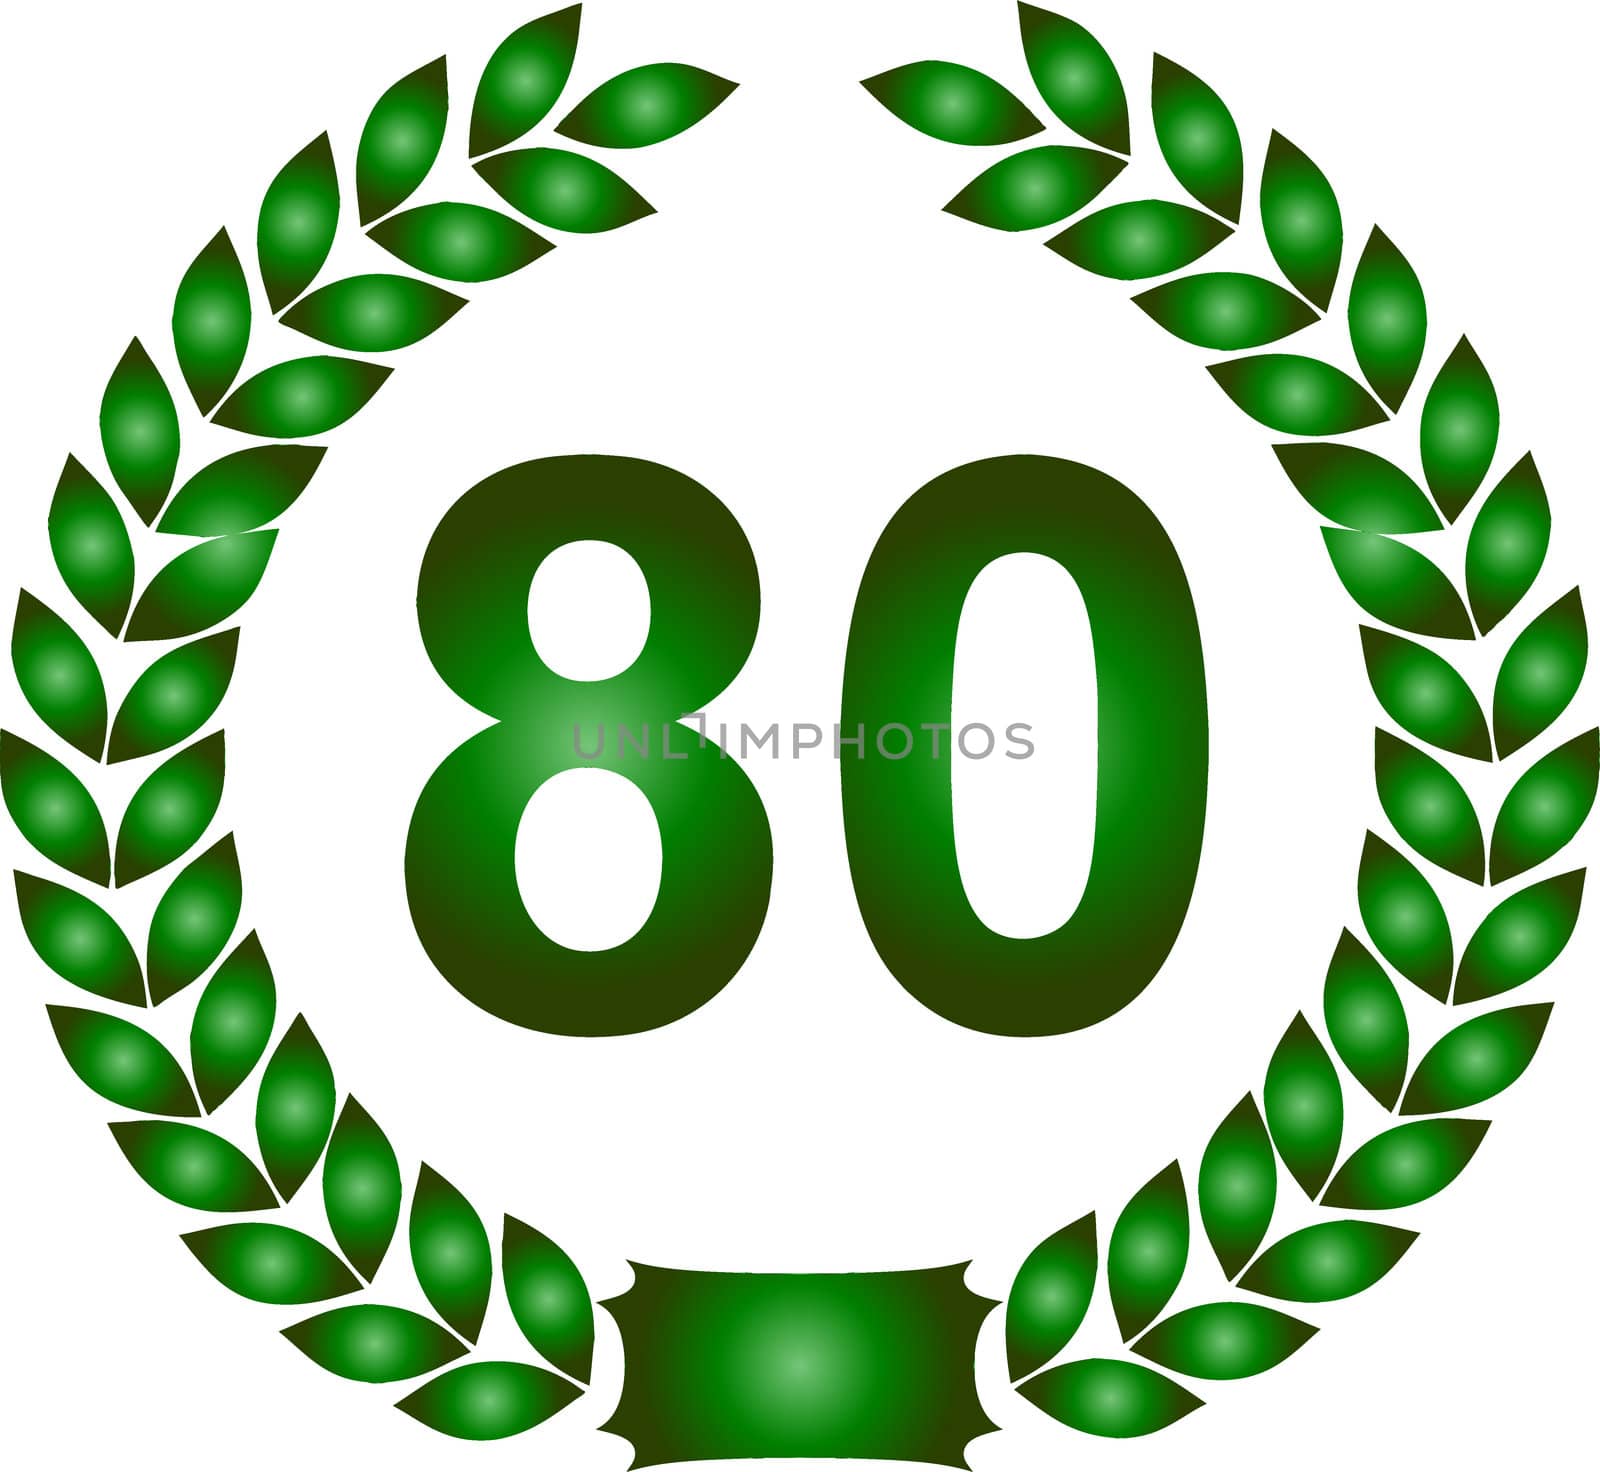 illustration of a green laurel wreath 80 years